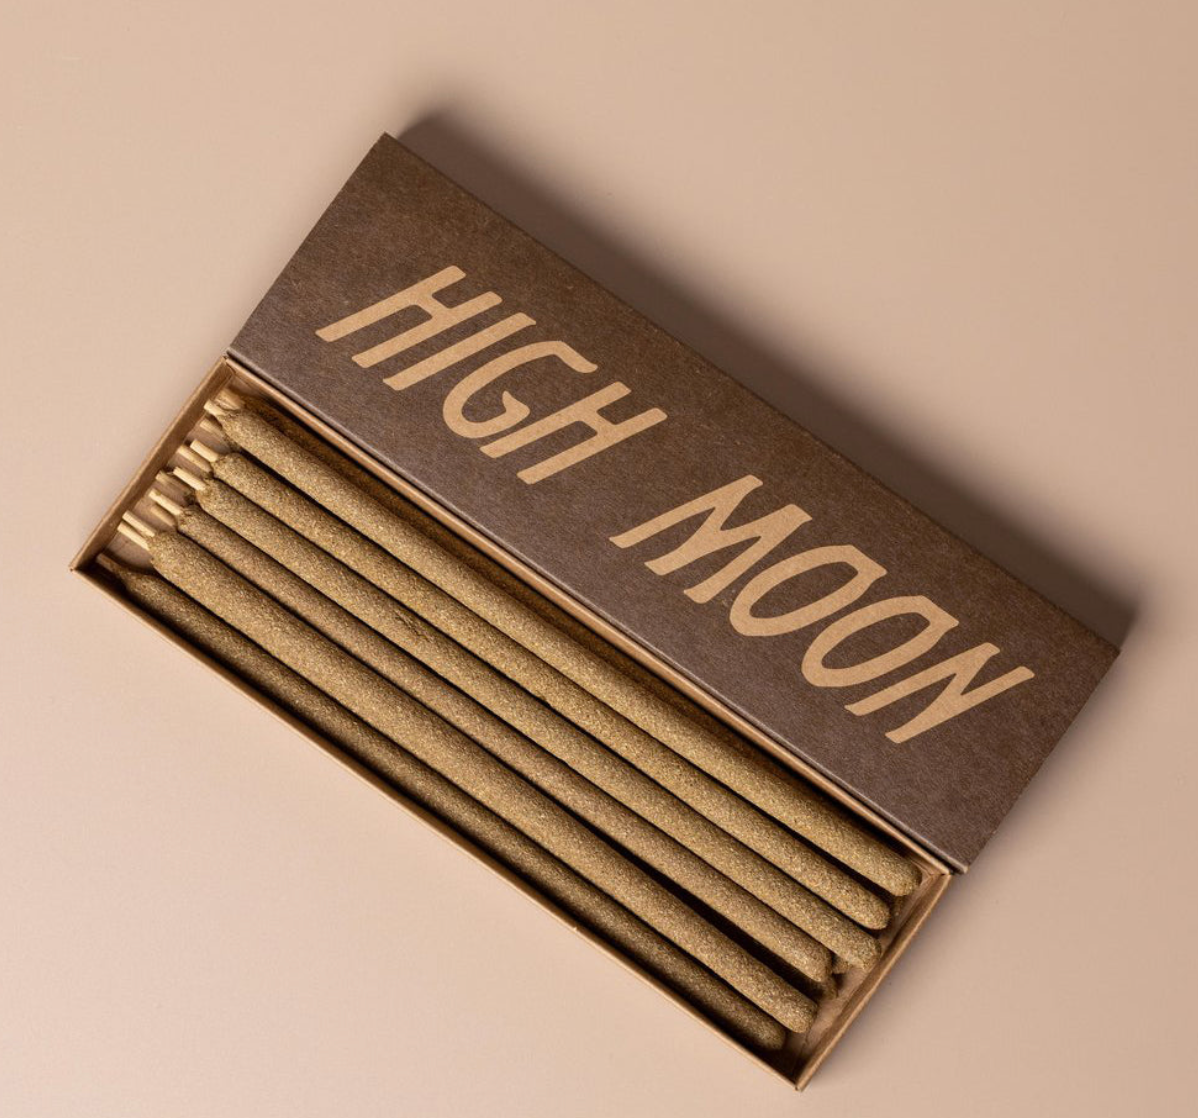 High Moon Palo Santo Incence Sticks